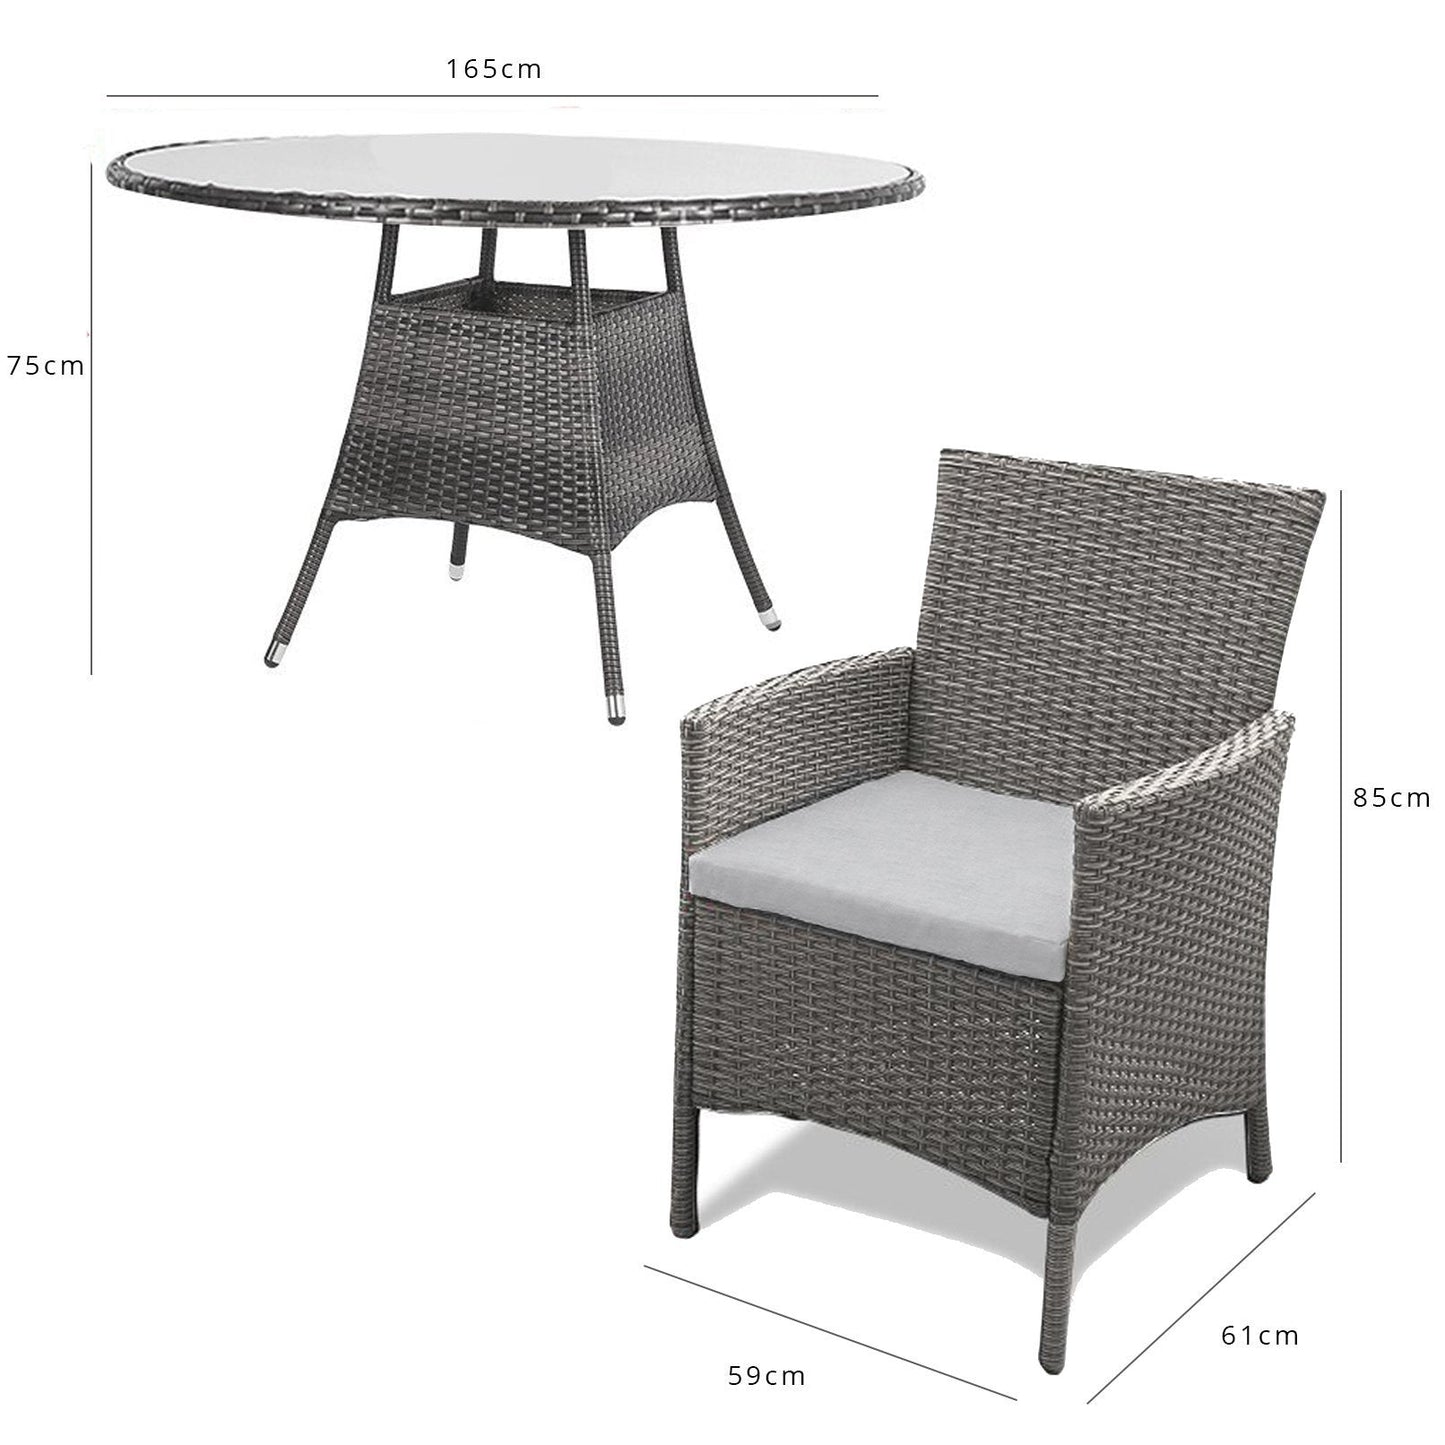 Kemble 8 Seater Rattan Round Dining Set with Parasol - Grey - Rattan Garden Furniture